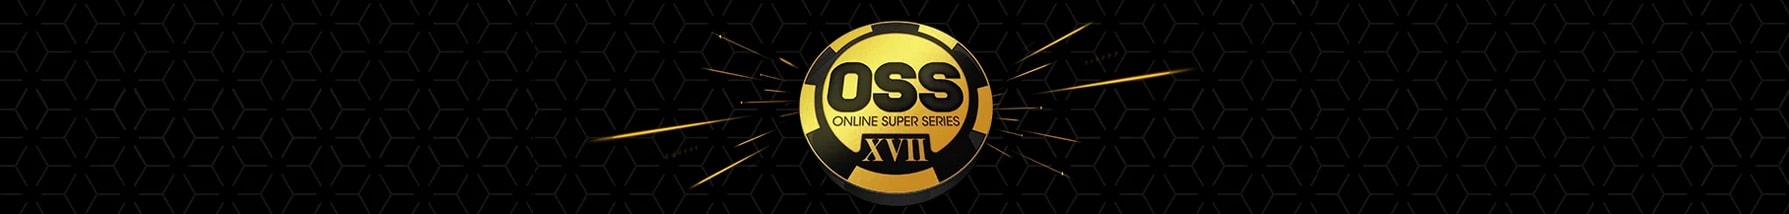 PokerKing OSS Tournament Series - Coming Soon!